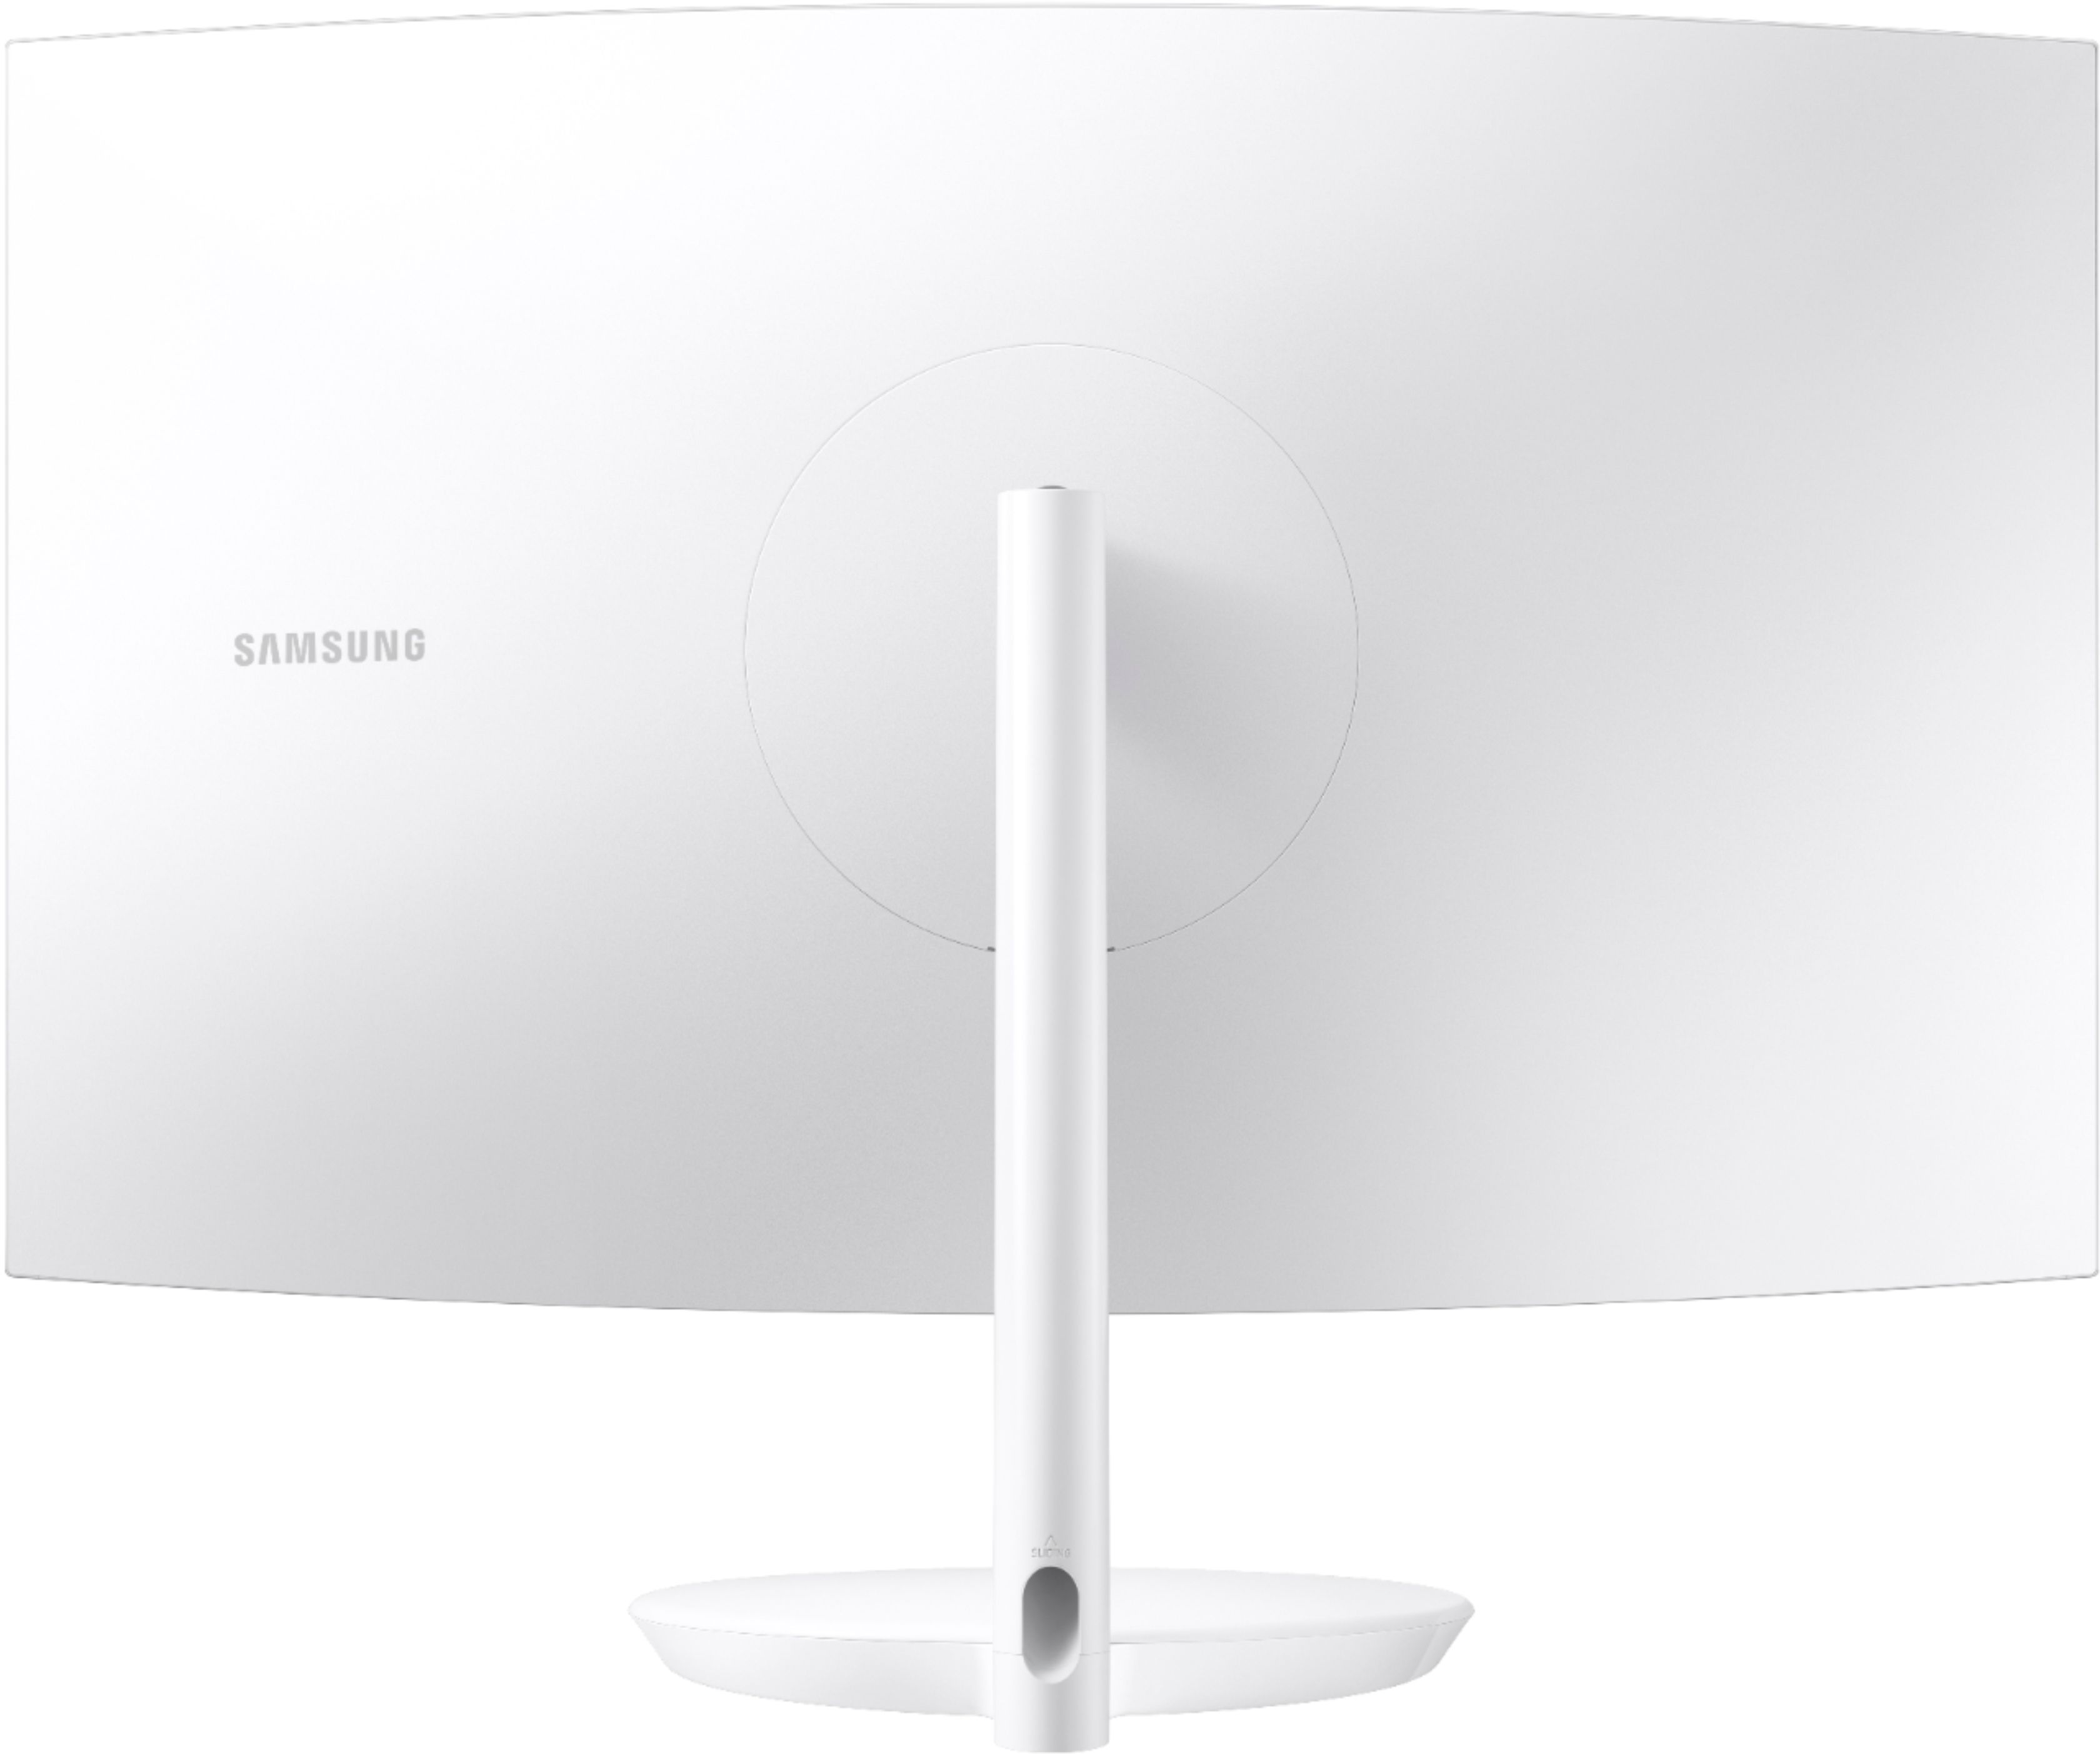 Back View: Samsung - Geek Squad Certified Refurbished 27" LED Curved WQHD FreeSync Monitor - Metallic Silver